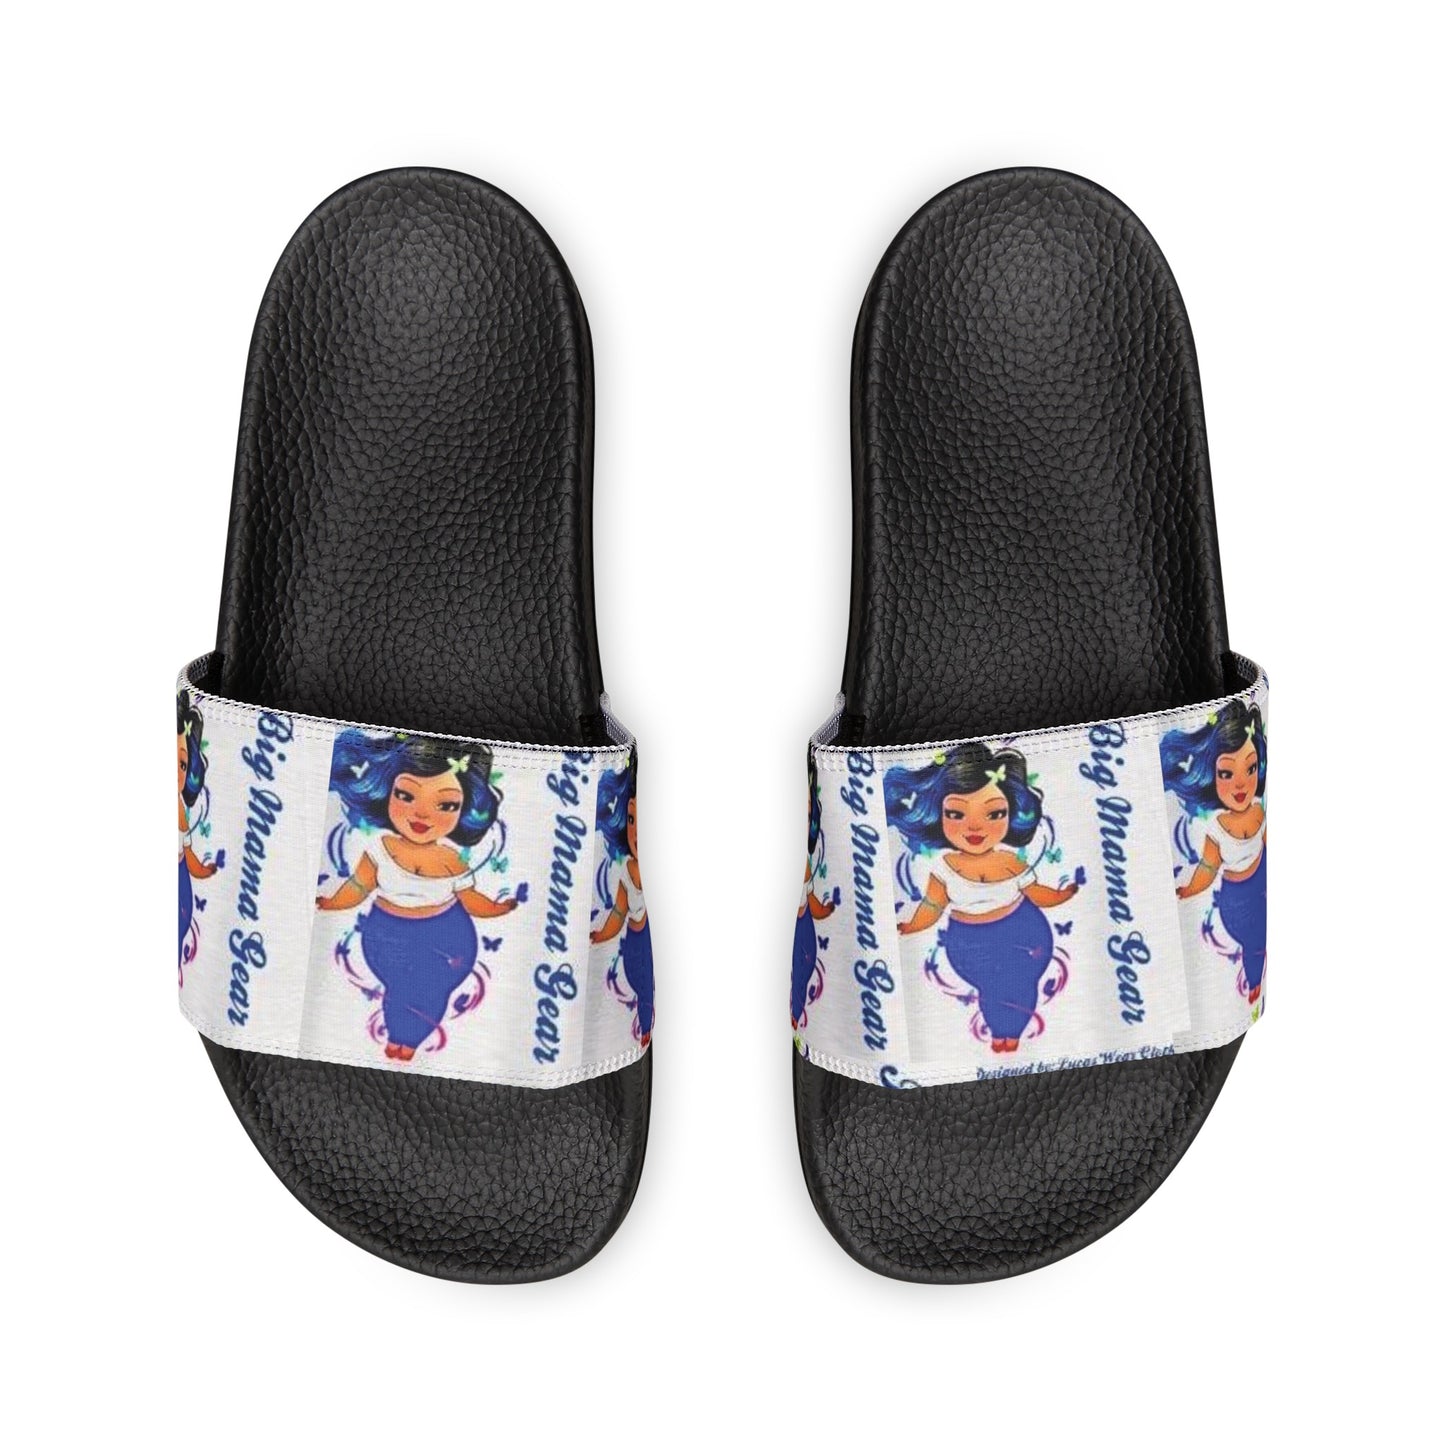 Lucas Wear Big Mama Gear (Women's PU Slide Sandals)